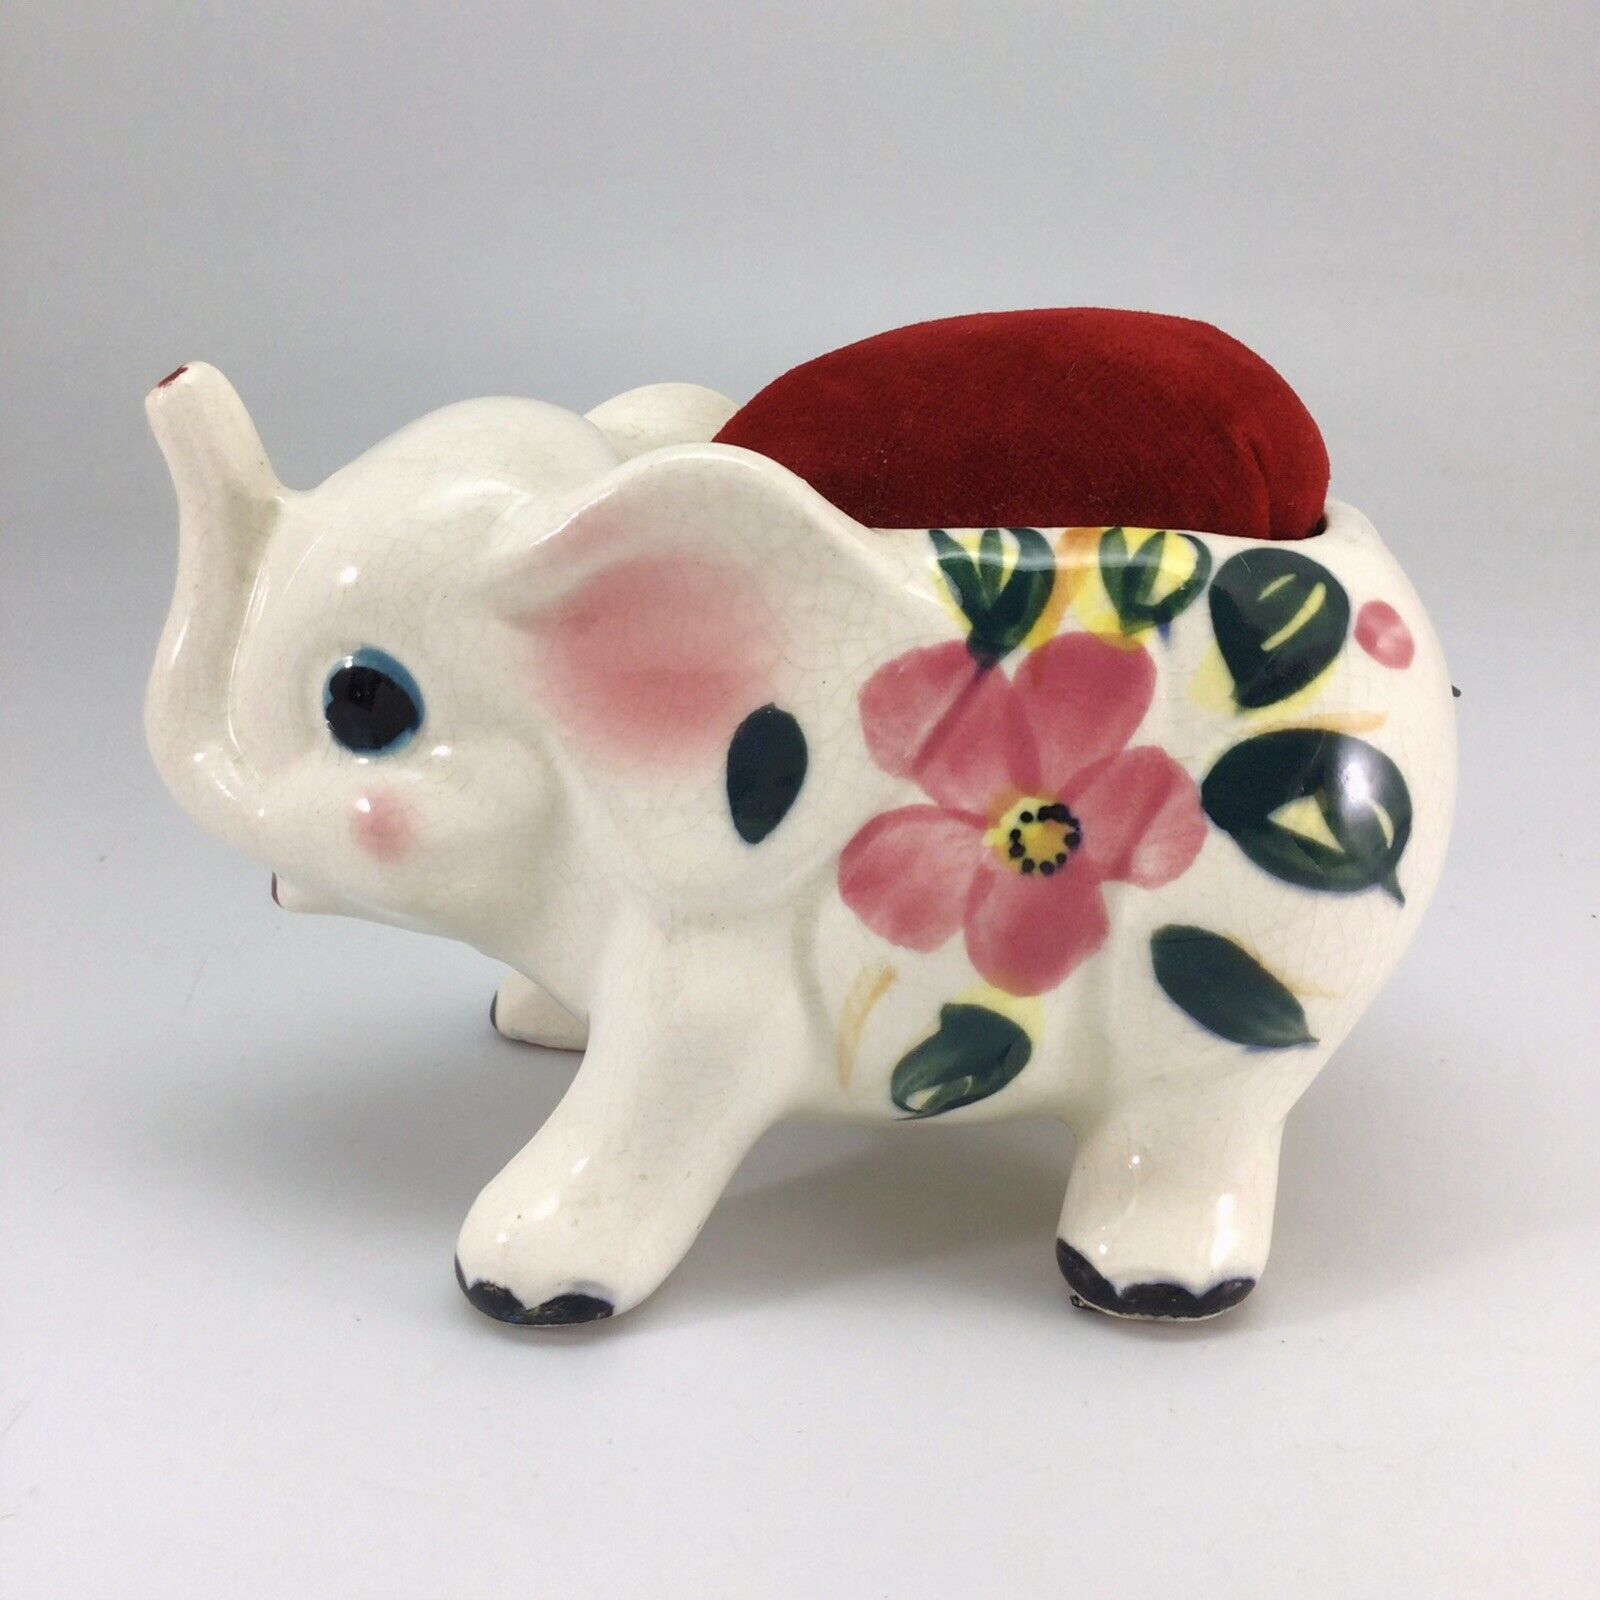 Vintage Elephant Pincushion Measuring Tape Floral Ceramic